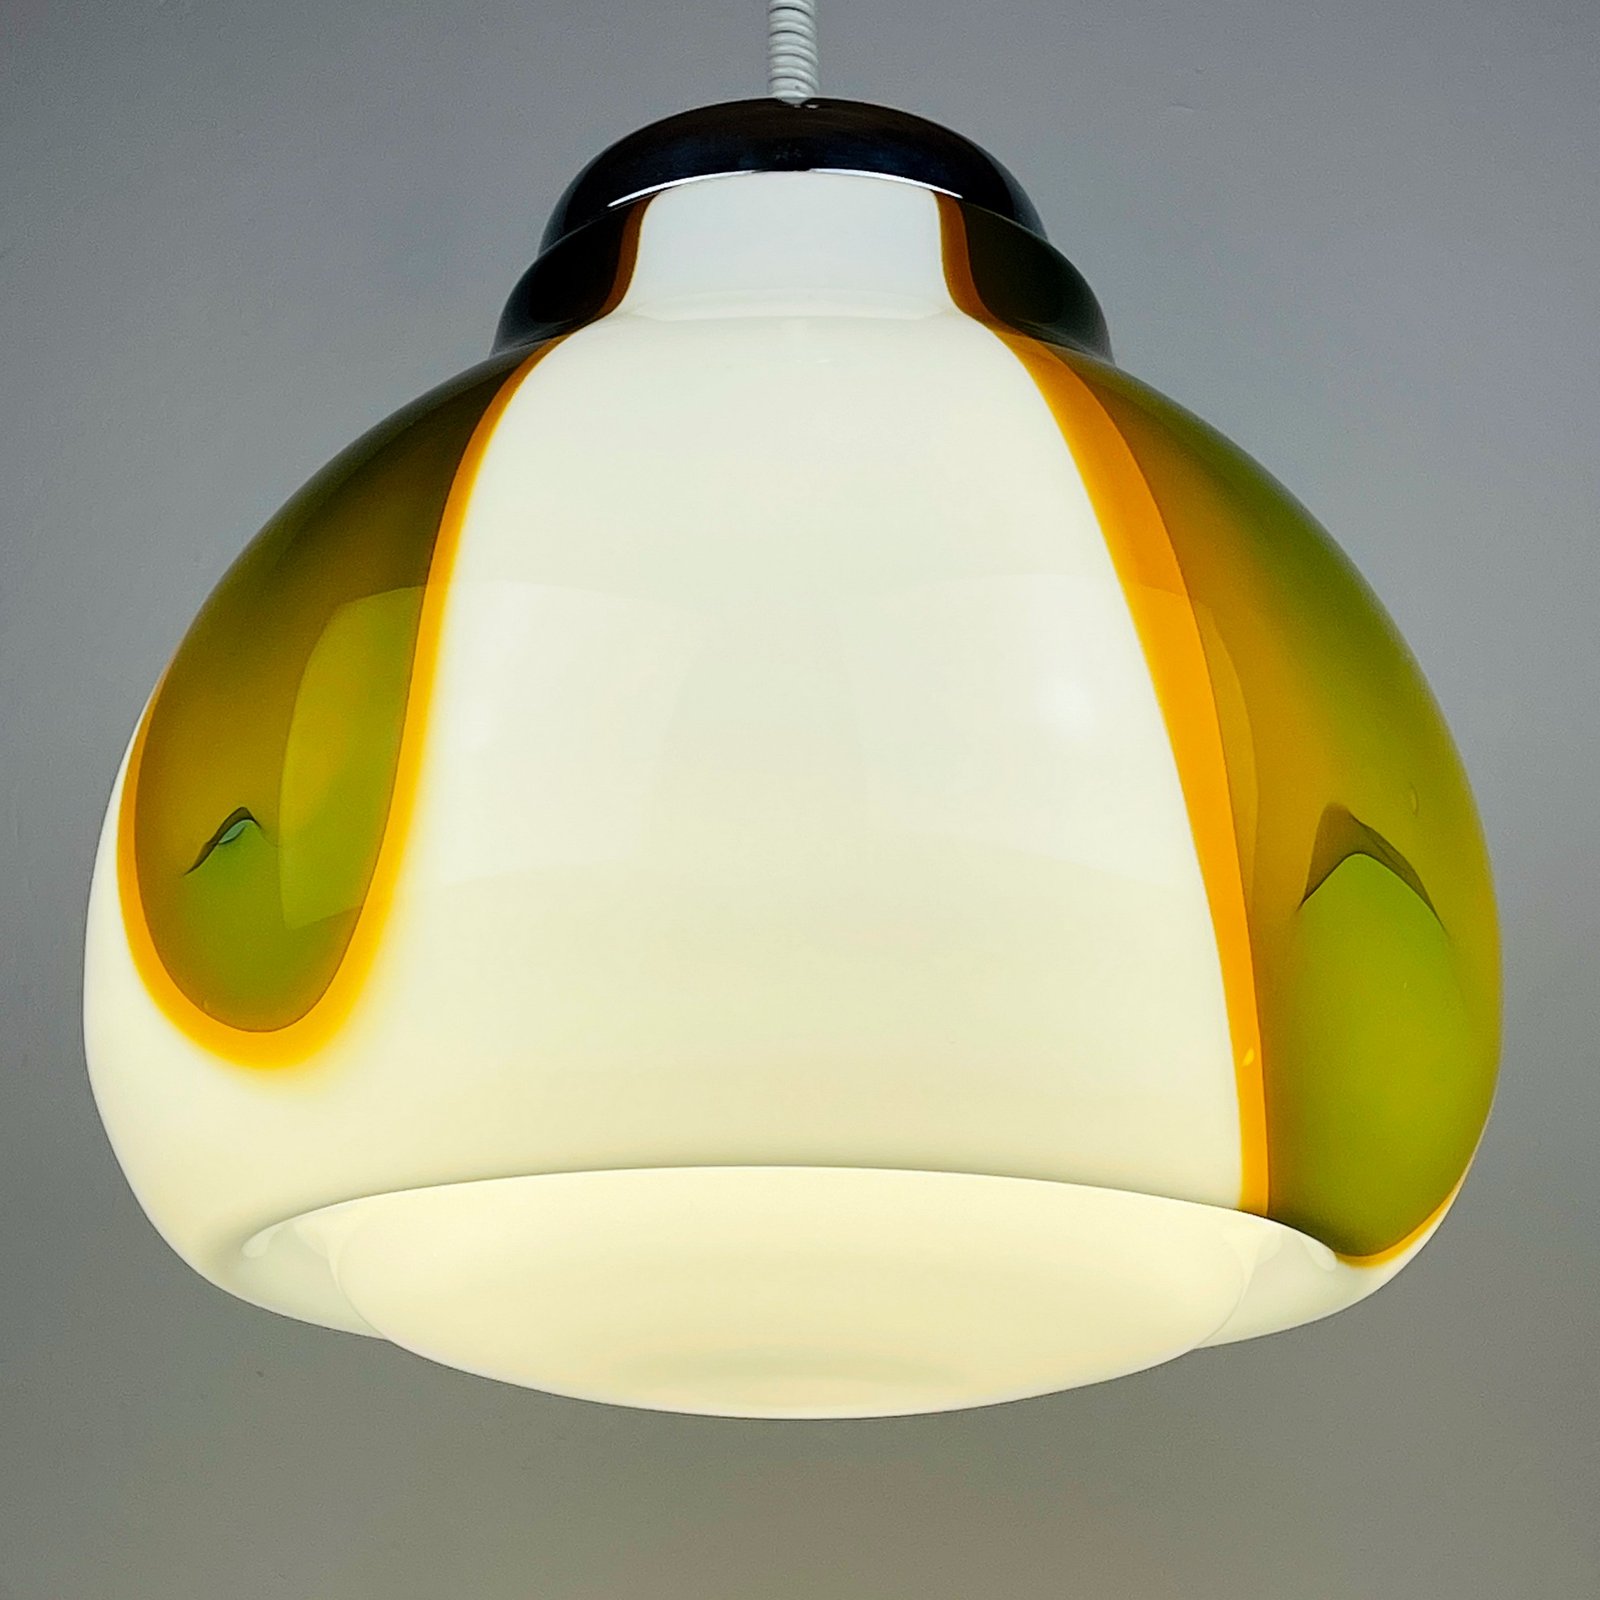 Vintage murano pendant lamp Italy 1970s Italian mid-century modern lighting